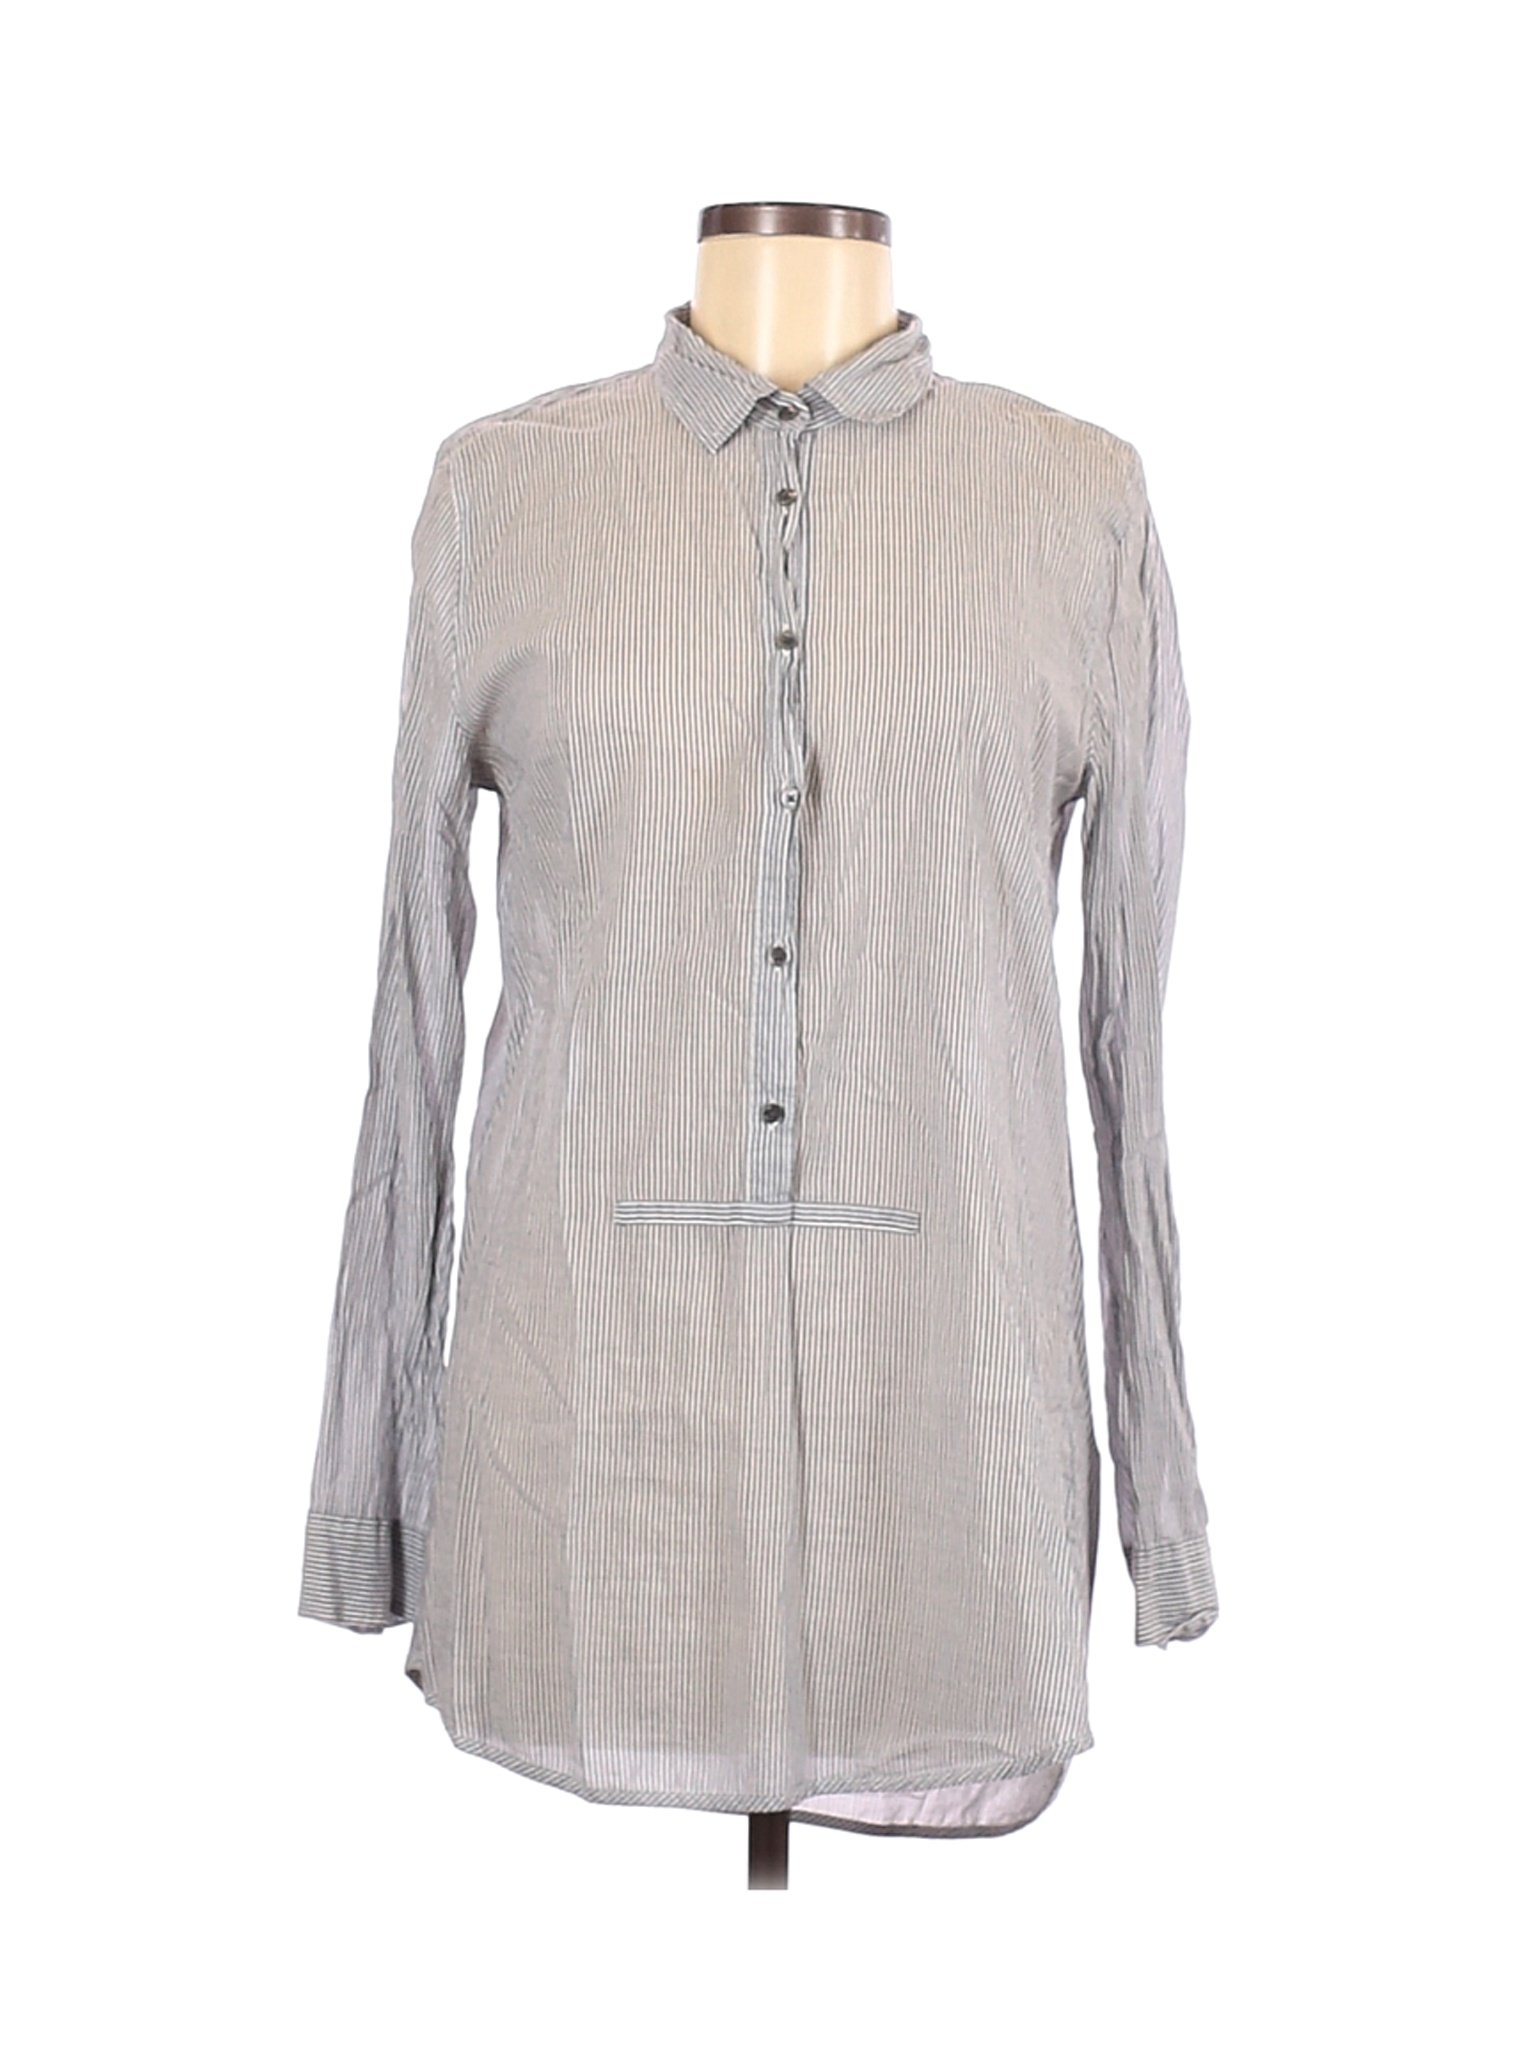 J.Crew Women Gray Long Sleeve Blouse S | eBay